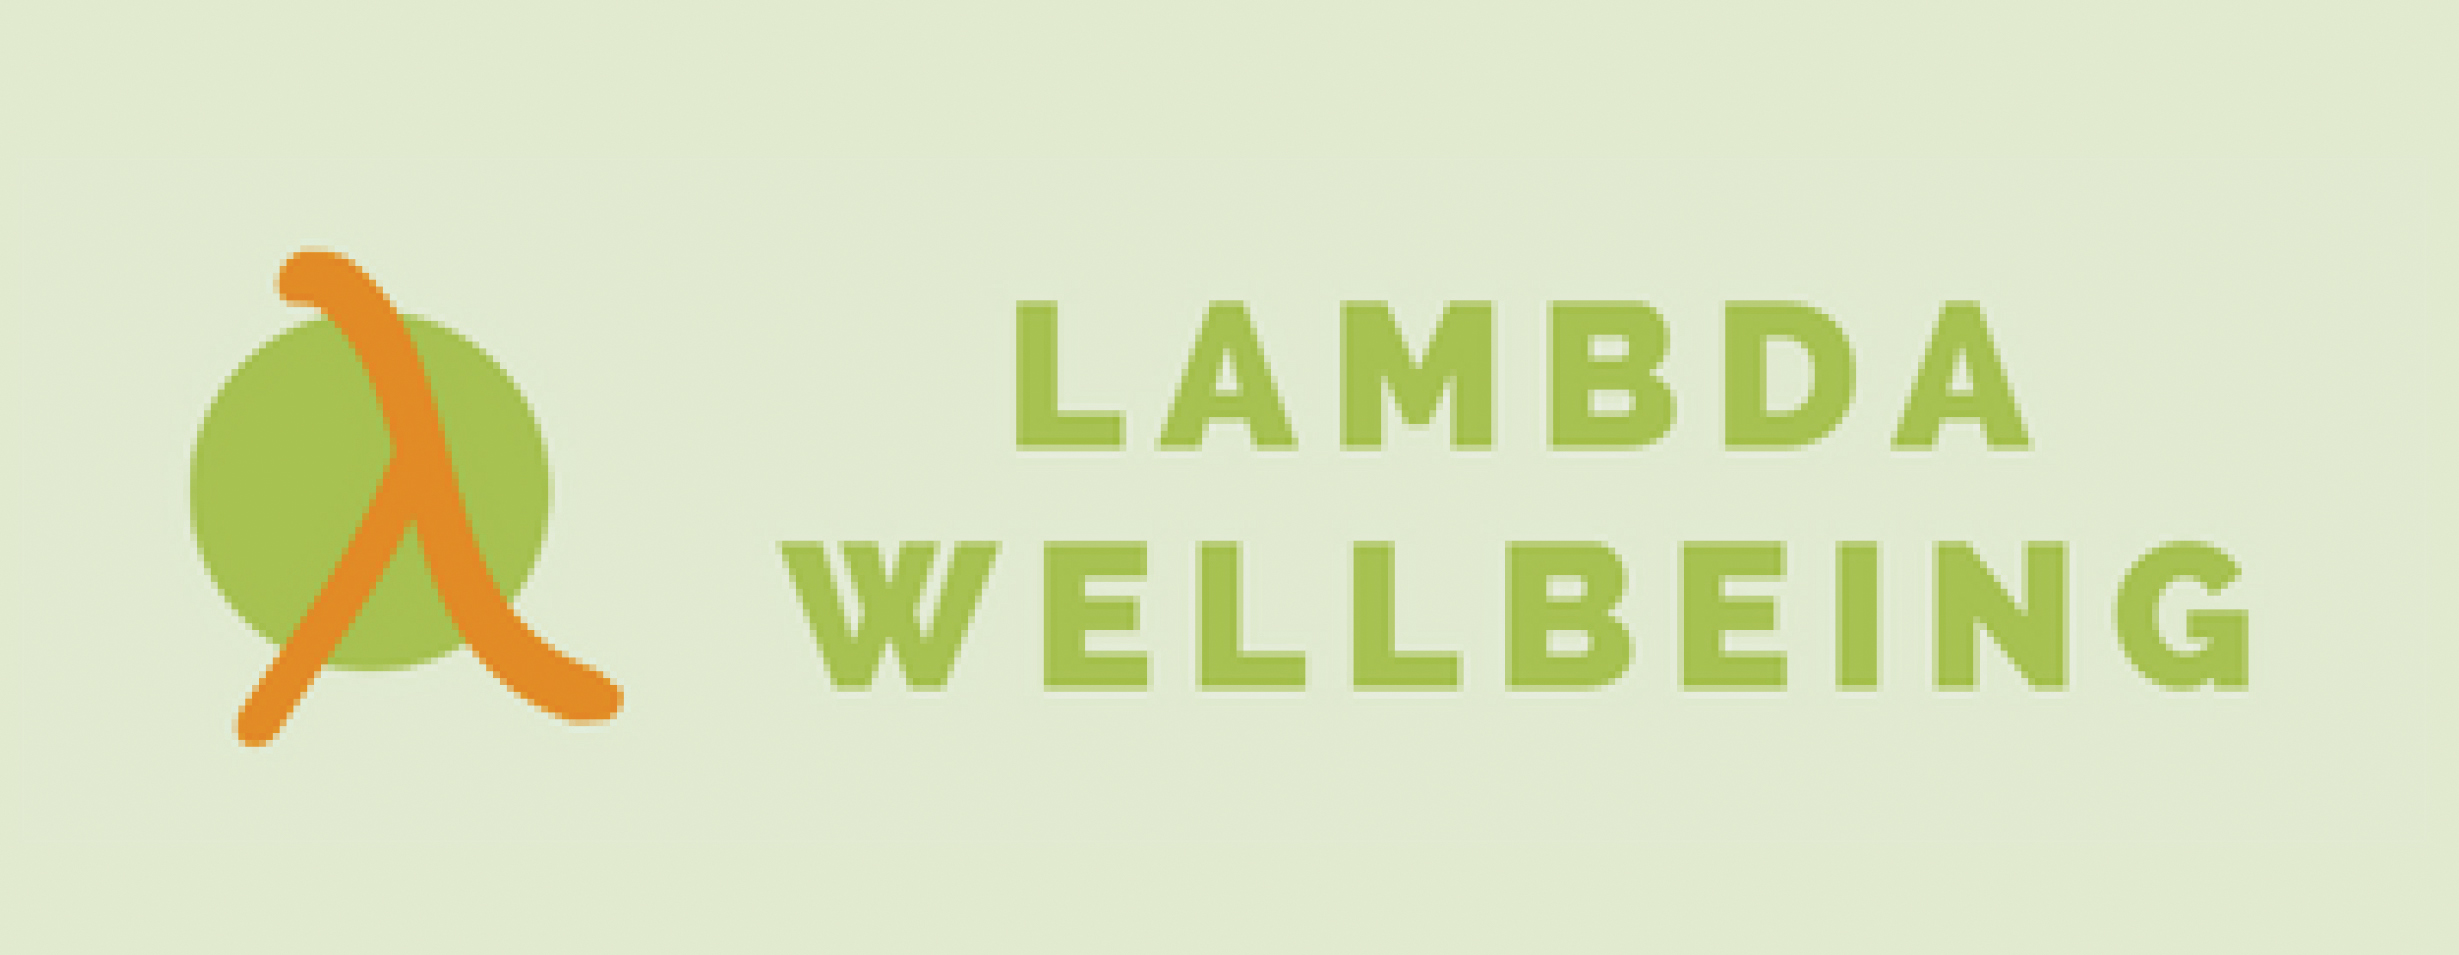 Lambda Wellbeing